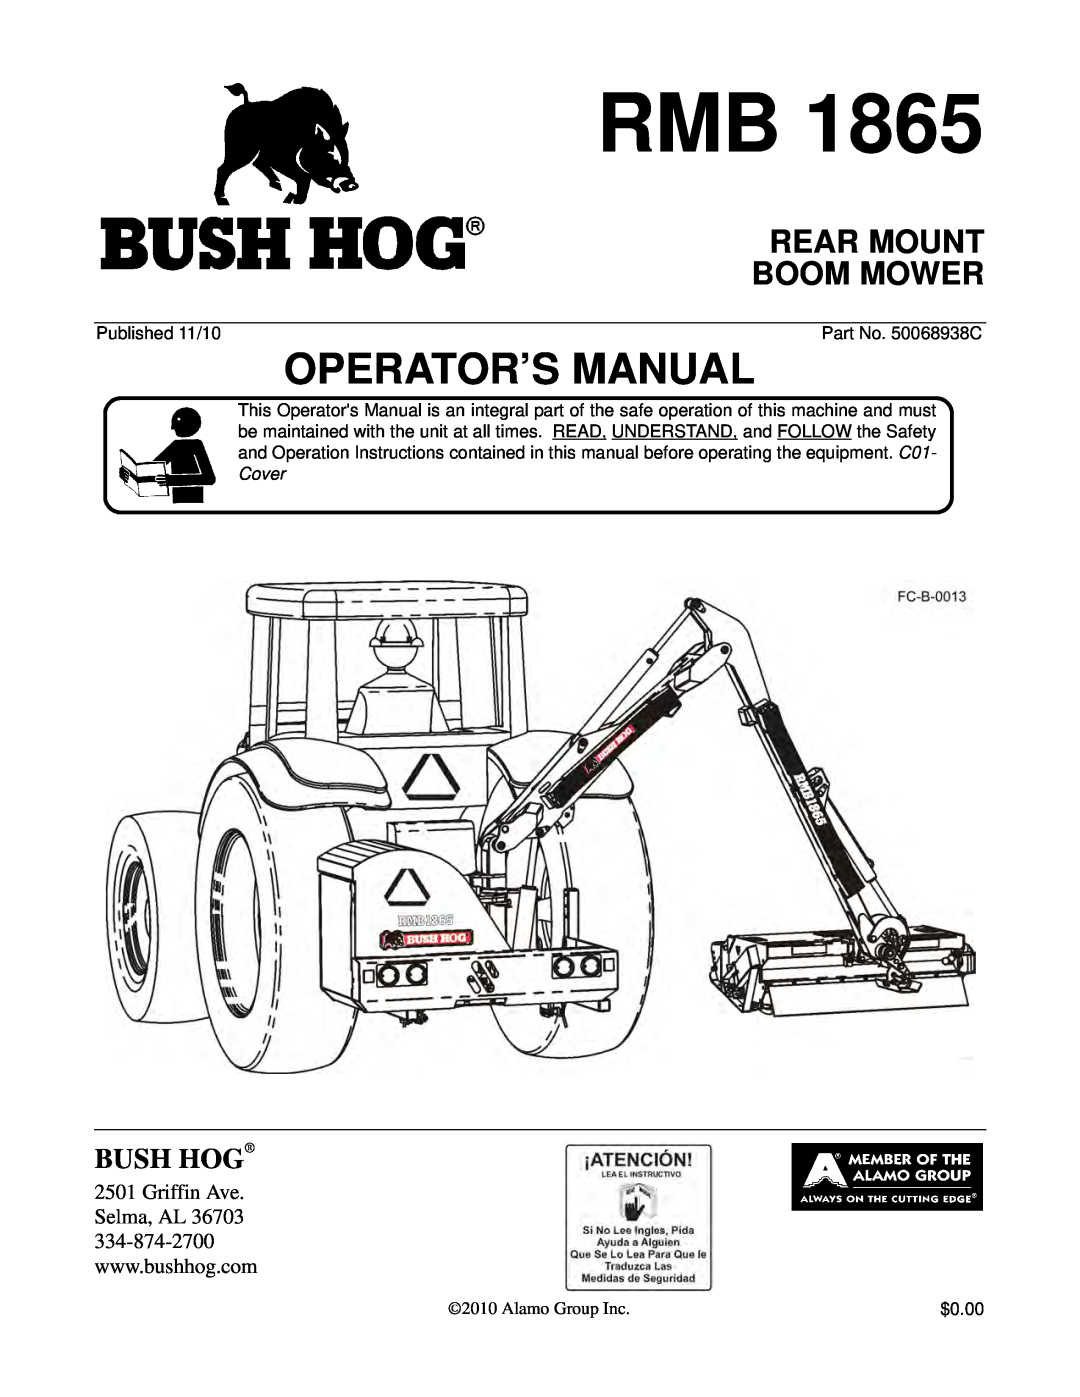 Bush Hog RMB 1865 manual Rear Mount Boom Mower, Operator’S Manual, Bush Hog 